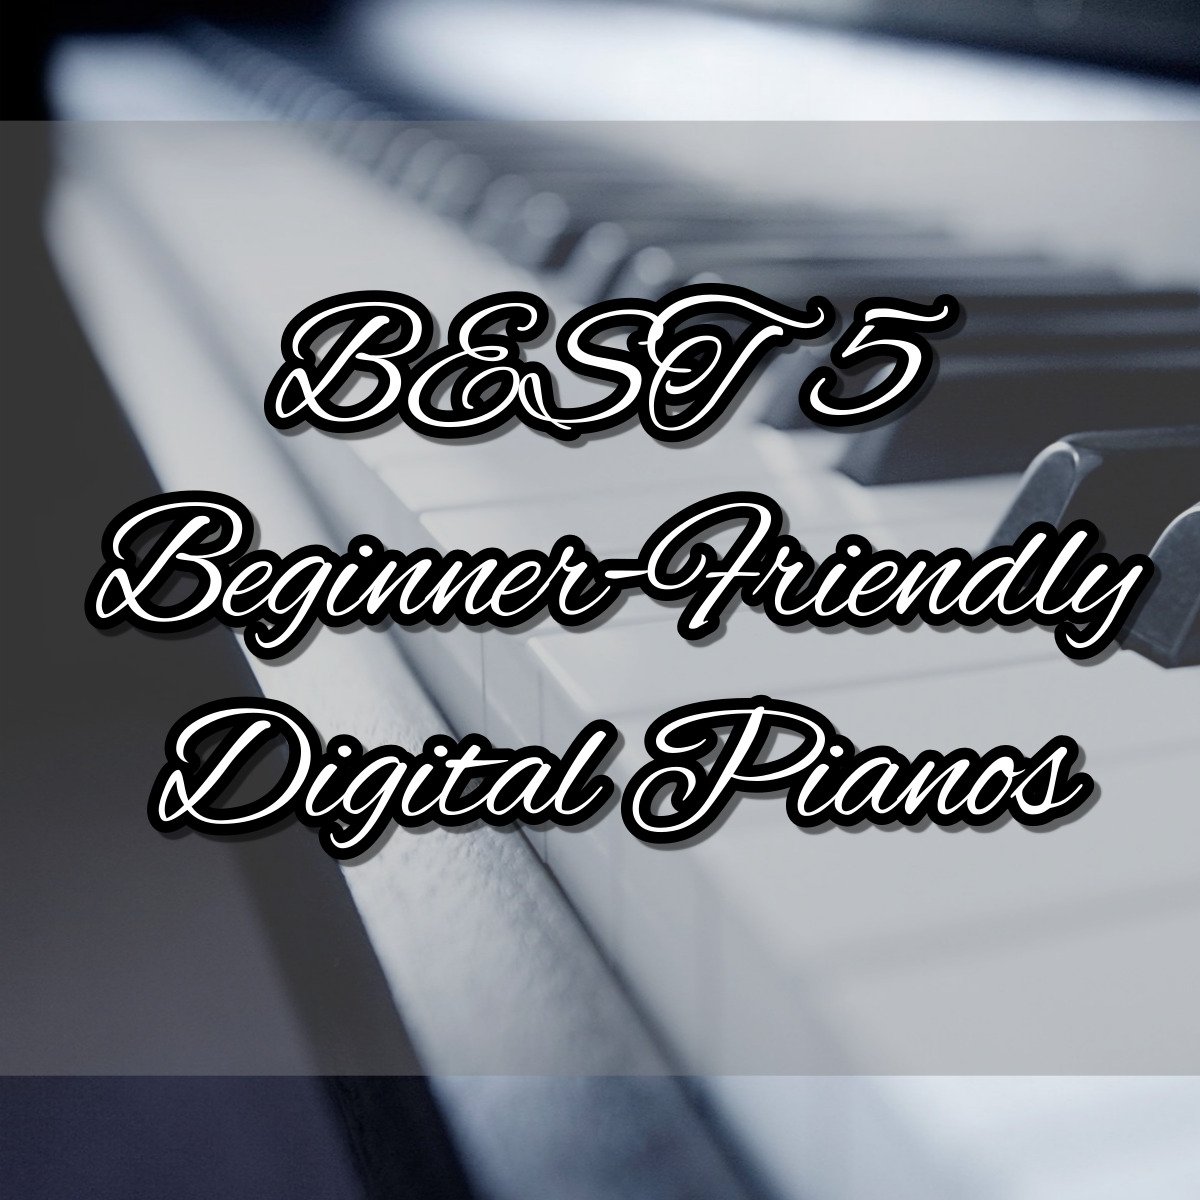 BEST 5 Beginner-Friendly Digital Pianos